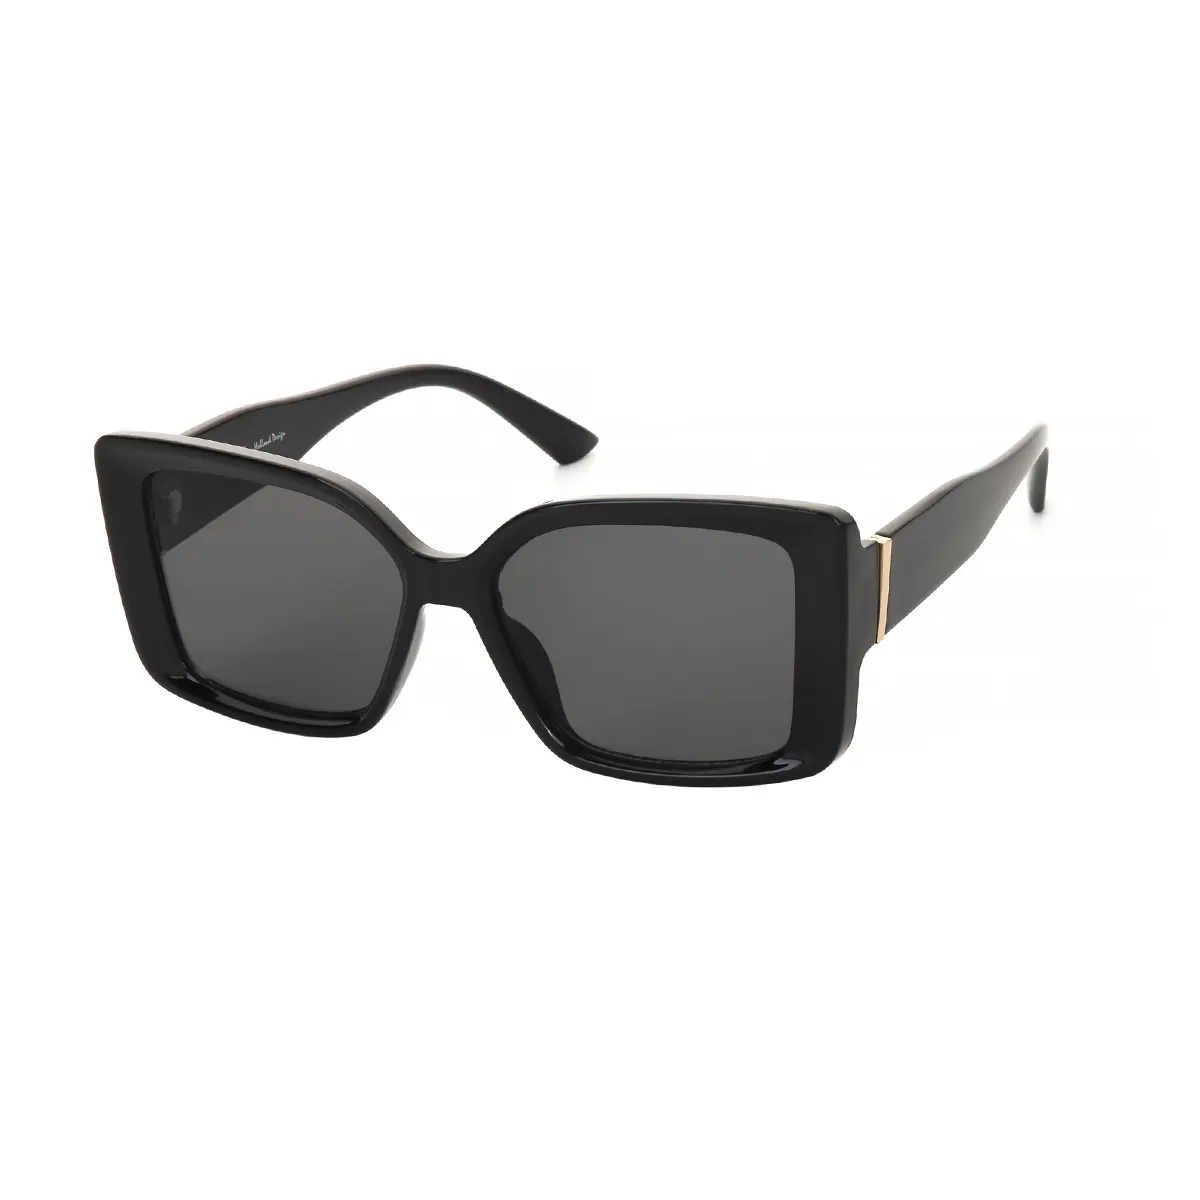 Pheebe - Square Matt Black Sunglasses for Women